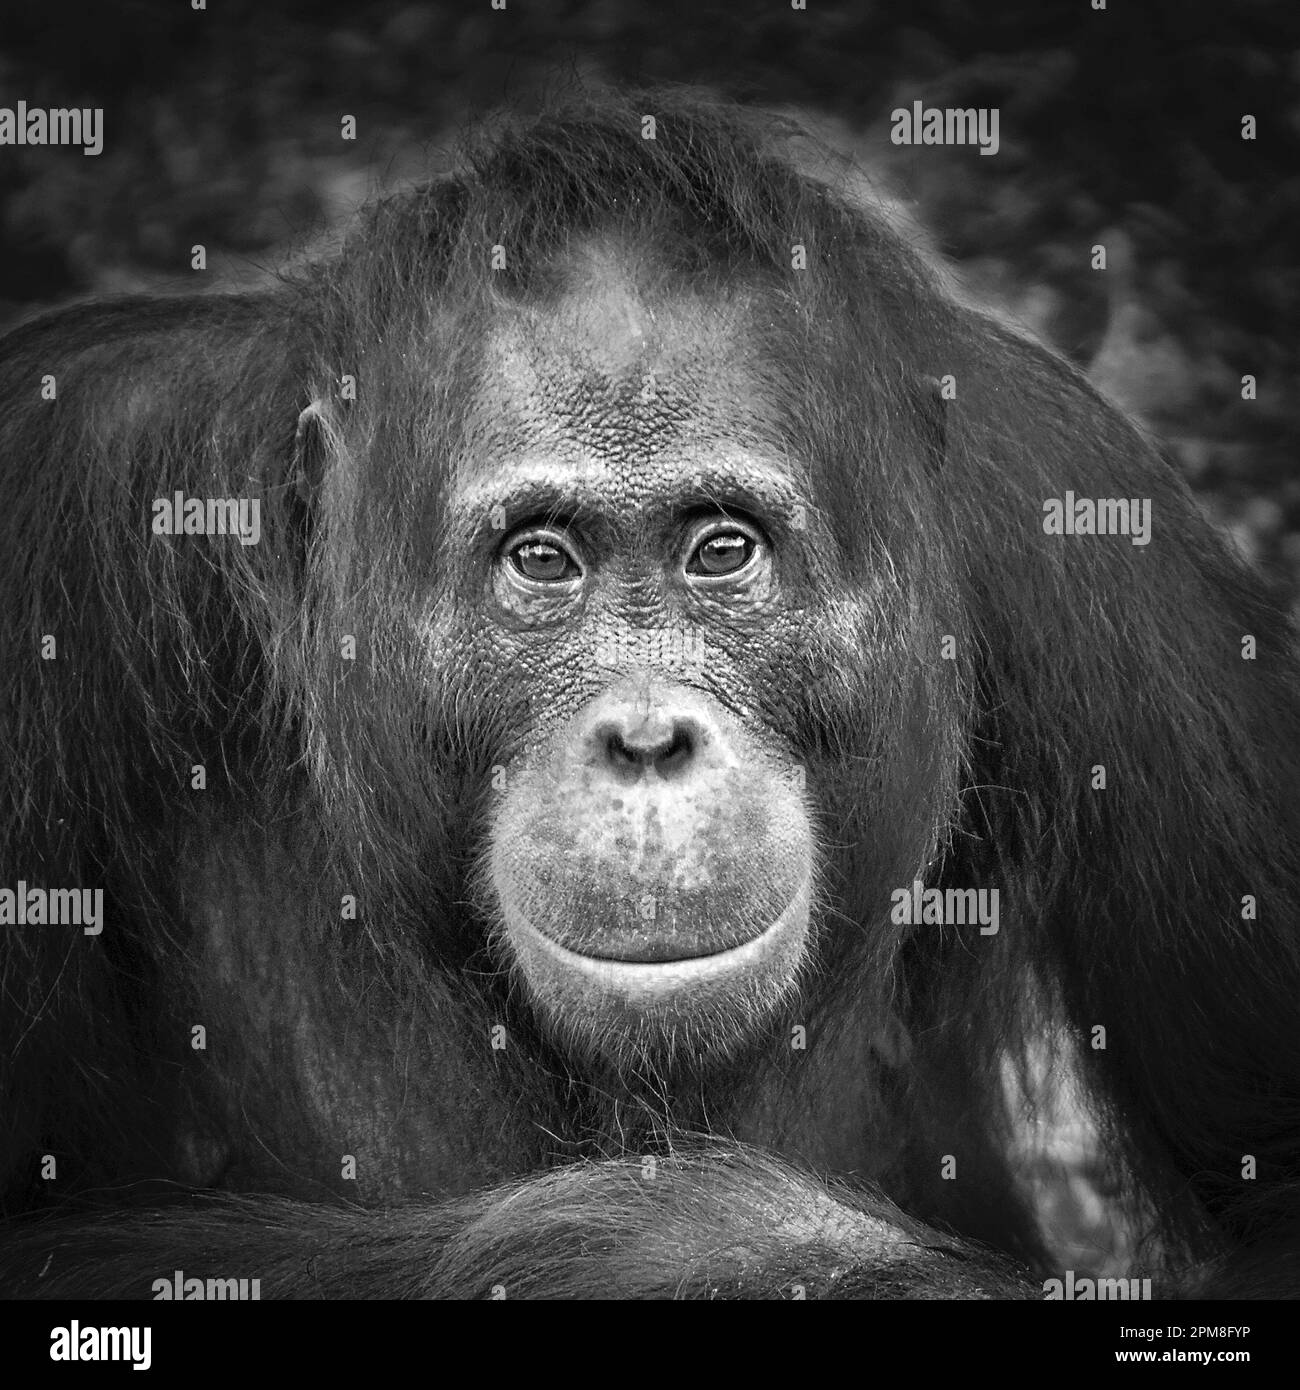 Indonesia, Surabaya, Java, Surabaya Zoo, Orang Utan, Pongo P. Pygmeus. Immagine in bianco e nero. Foto Stock